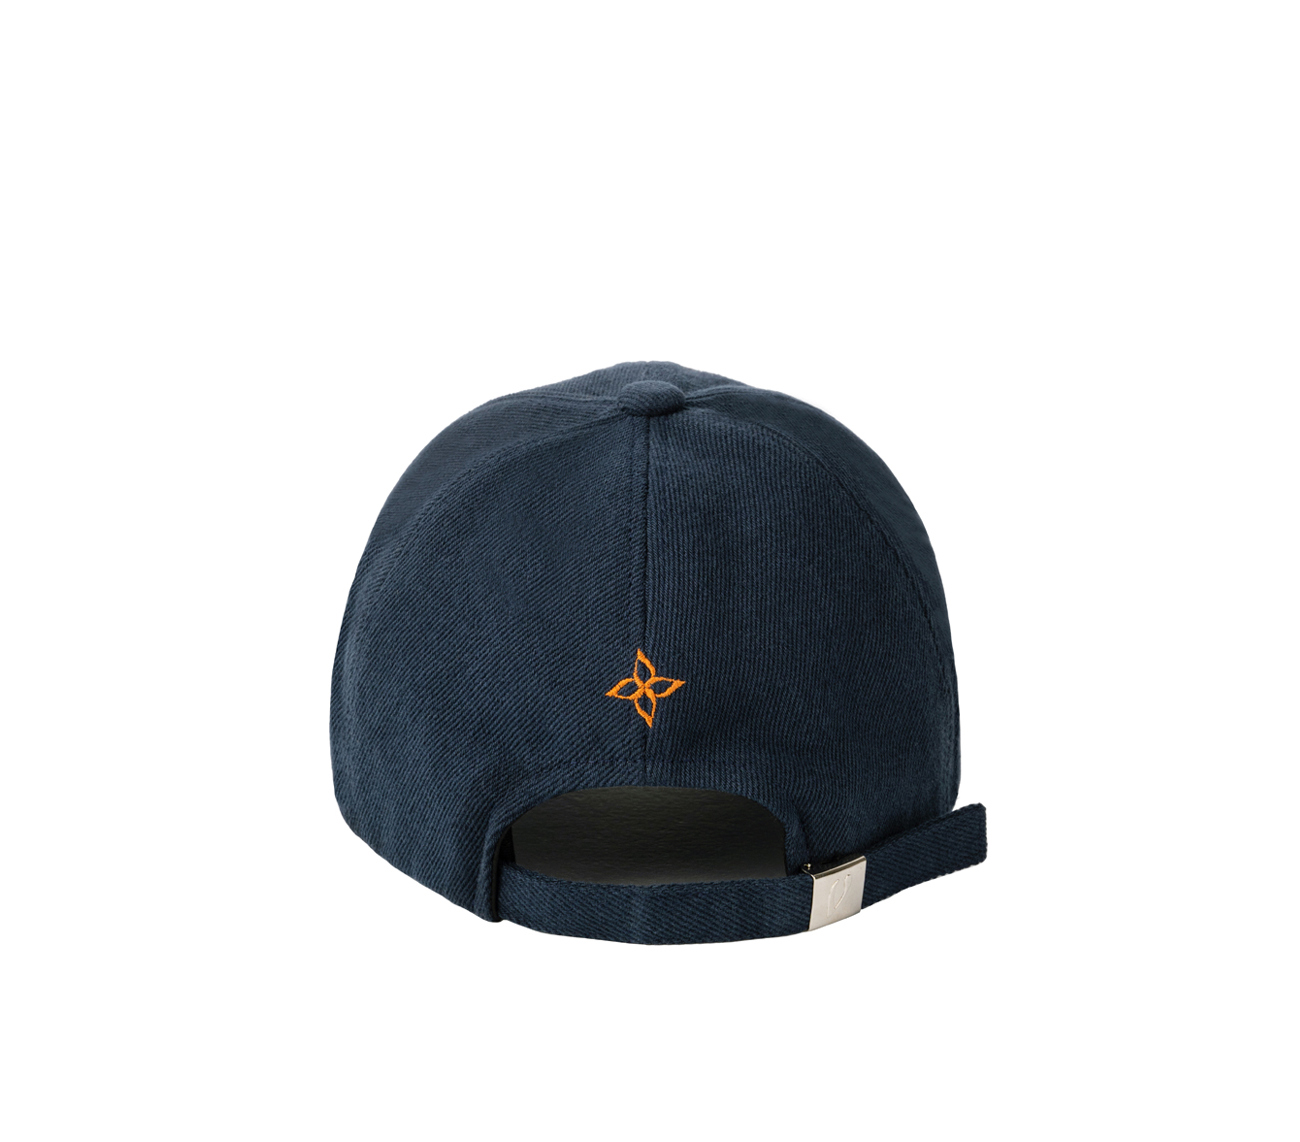 hat navy blue color image-S3L3